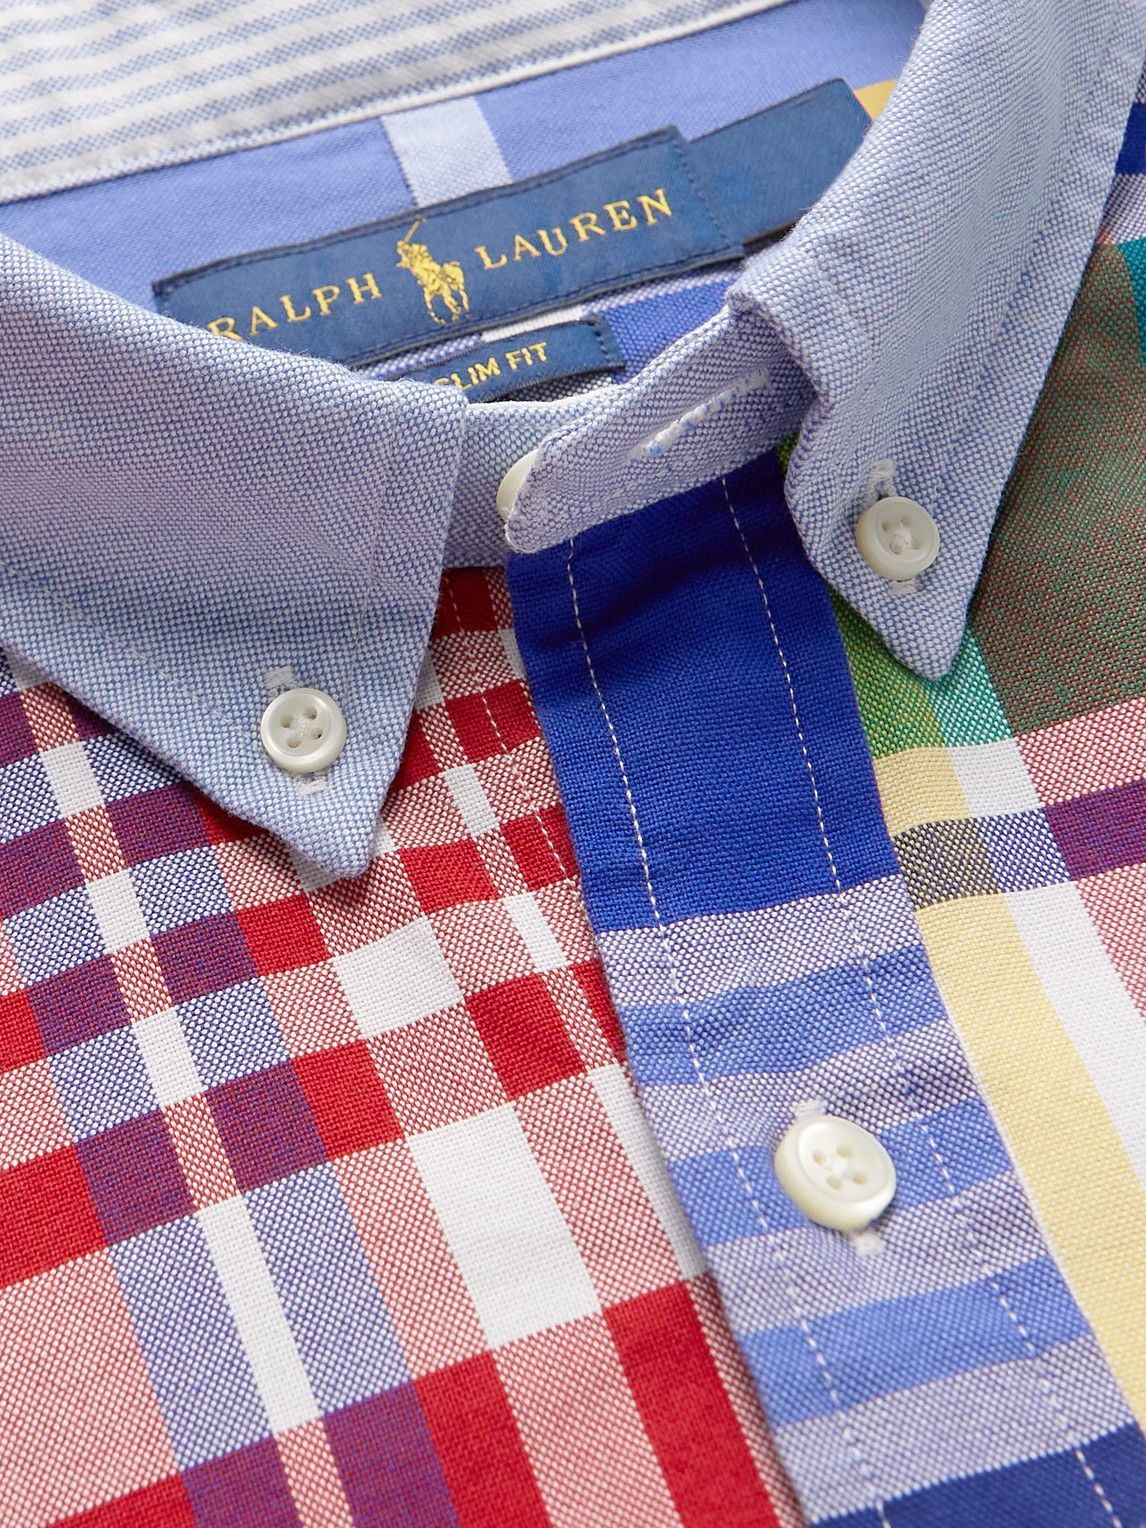 Polo Ralph Lauren - Button-Down Collar Checked Cotton Oxford Shirt - Red